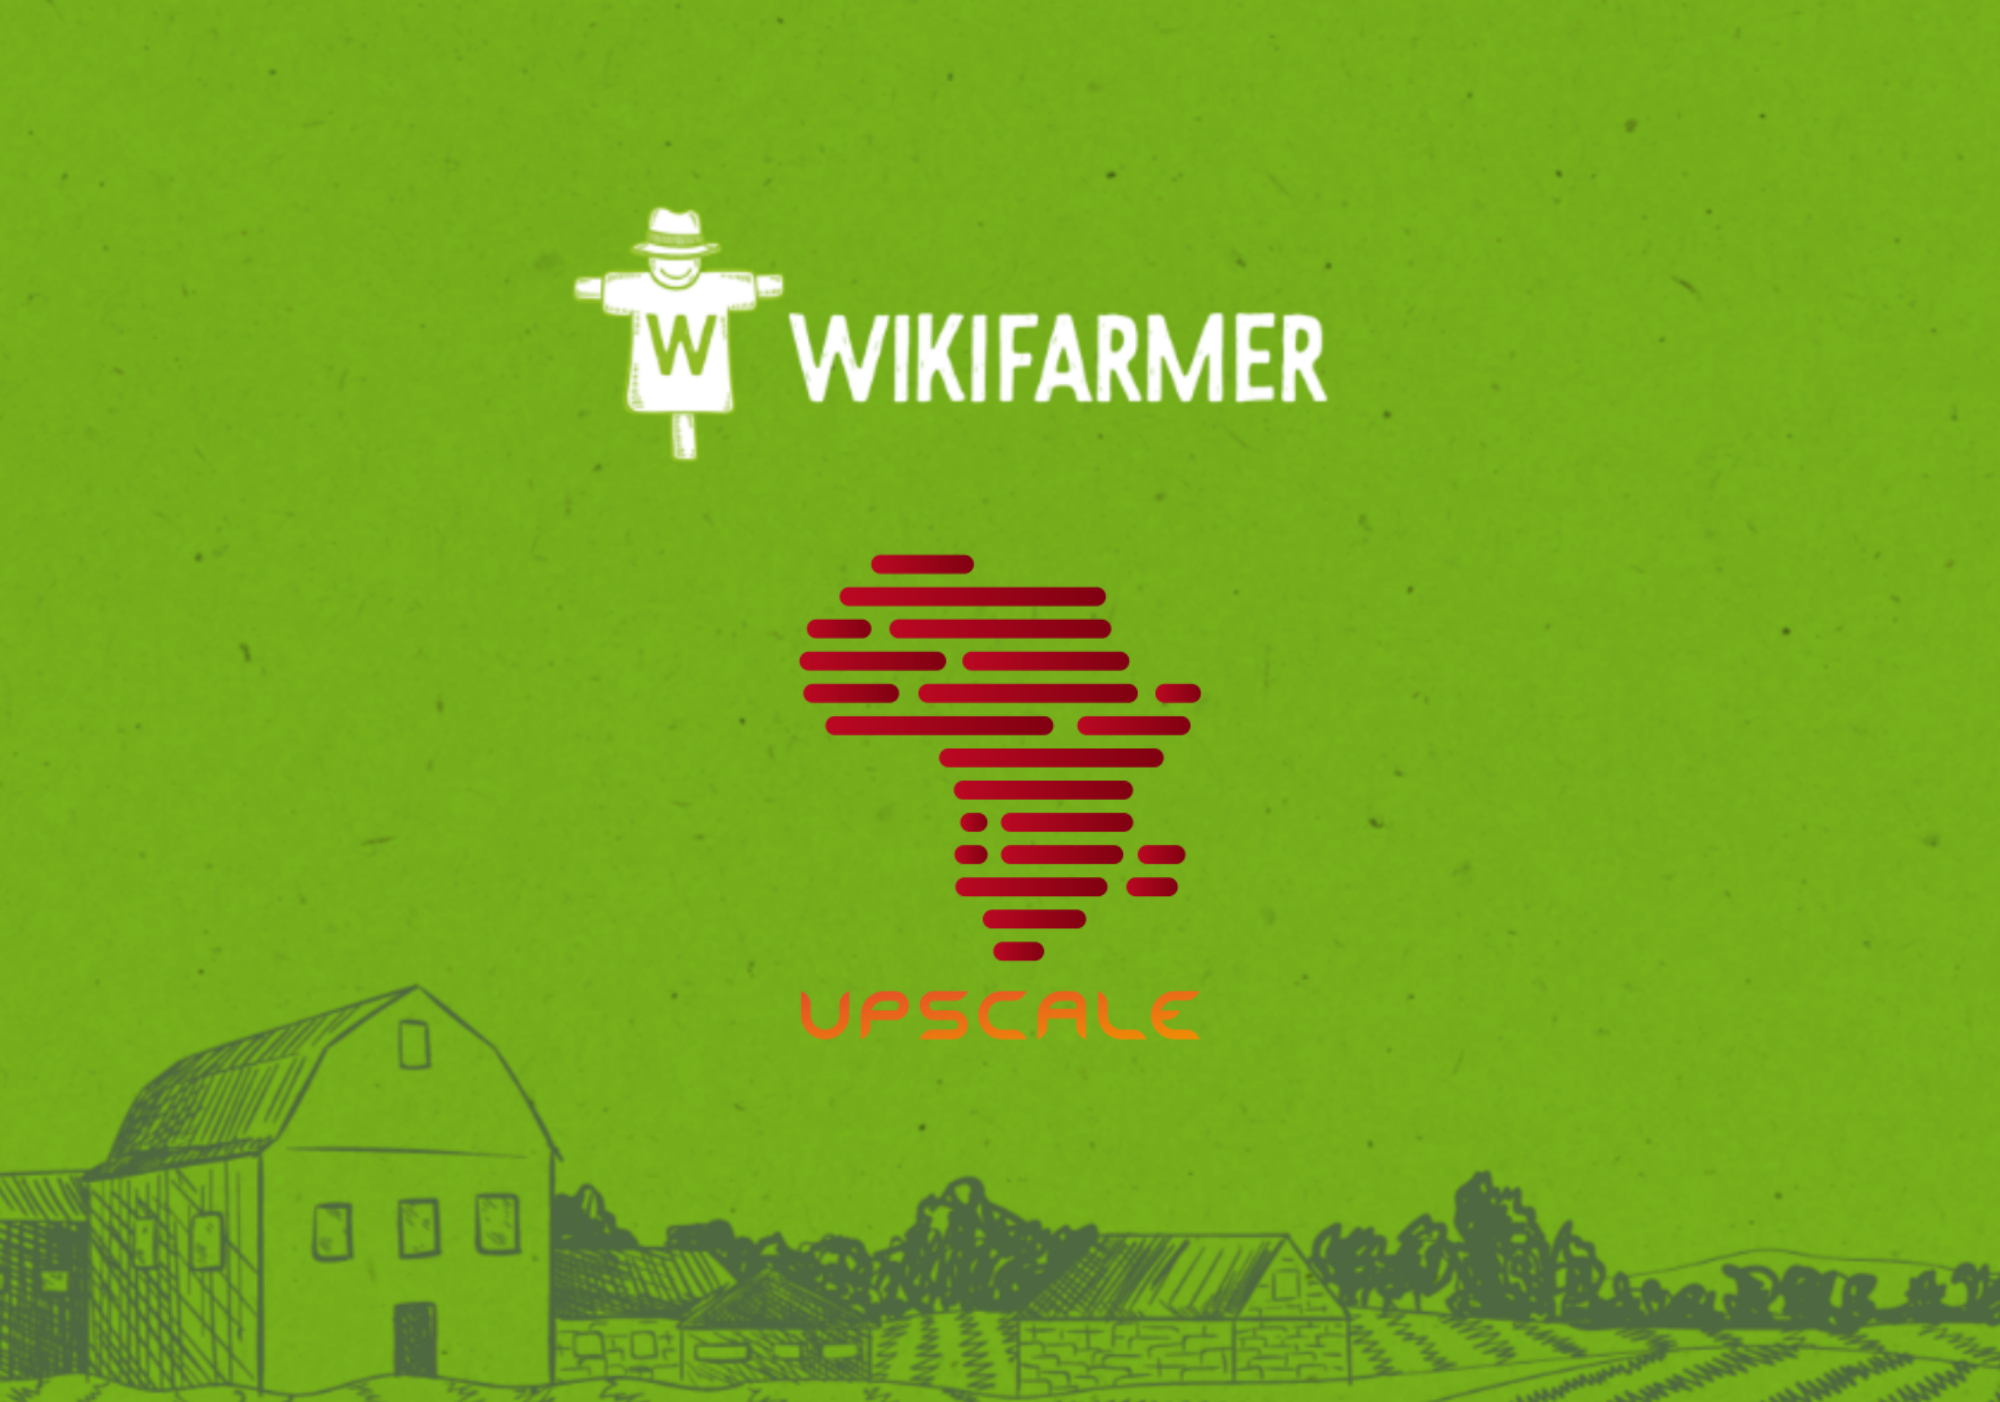 Partnership between Wikifarmer and UPSCALE